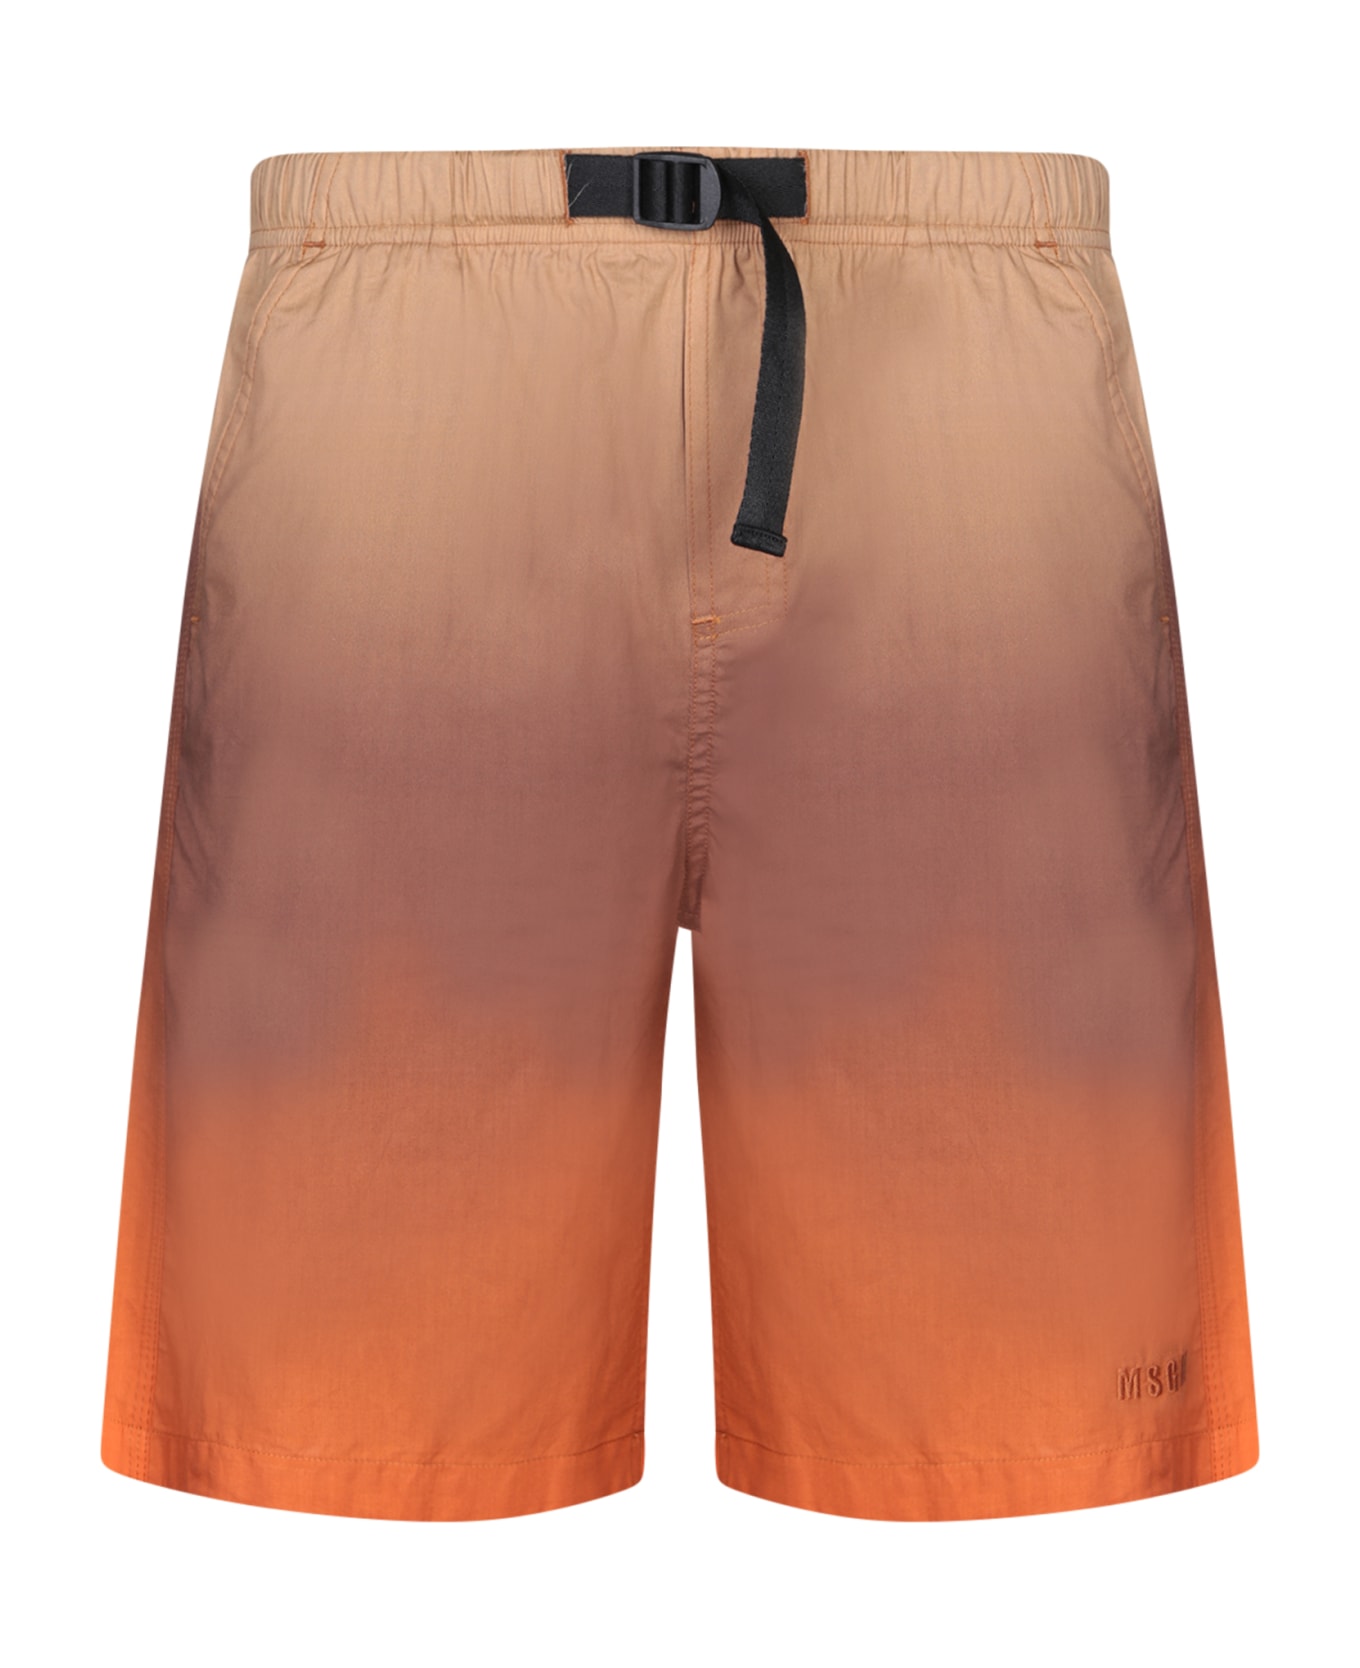 MSGM Dregradã¨ Beige/orange Bermuda Shorts - Beige